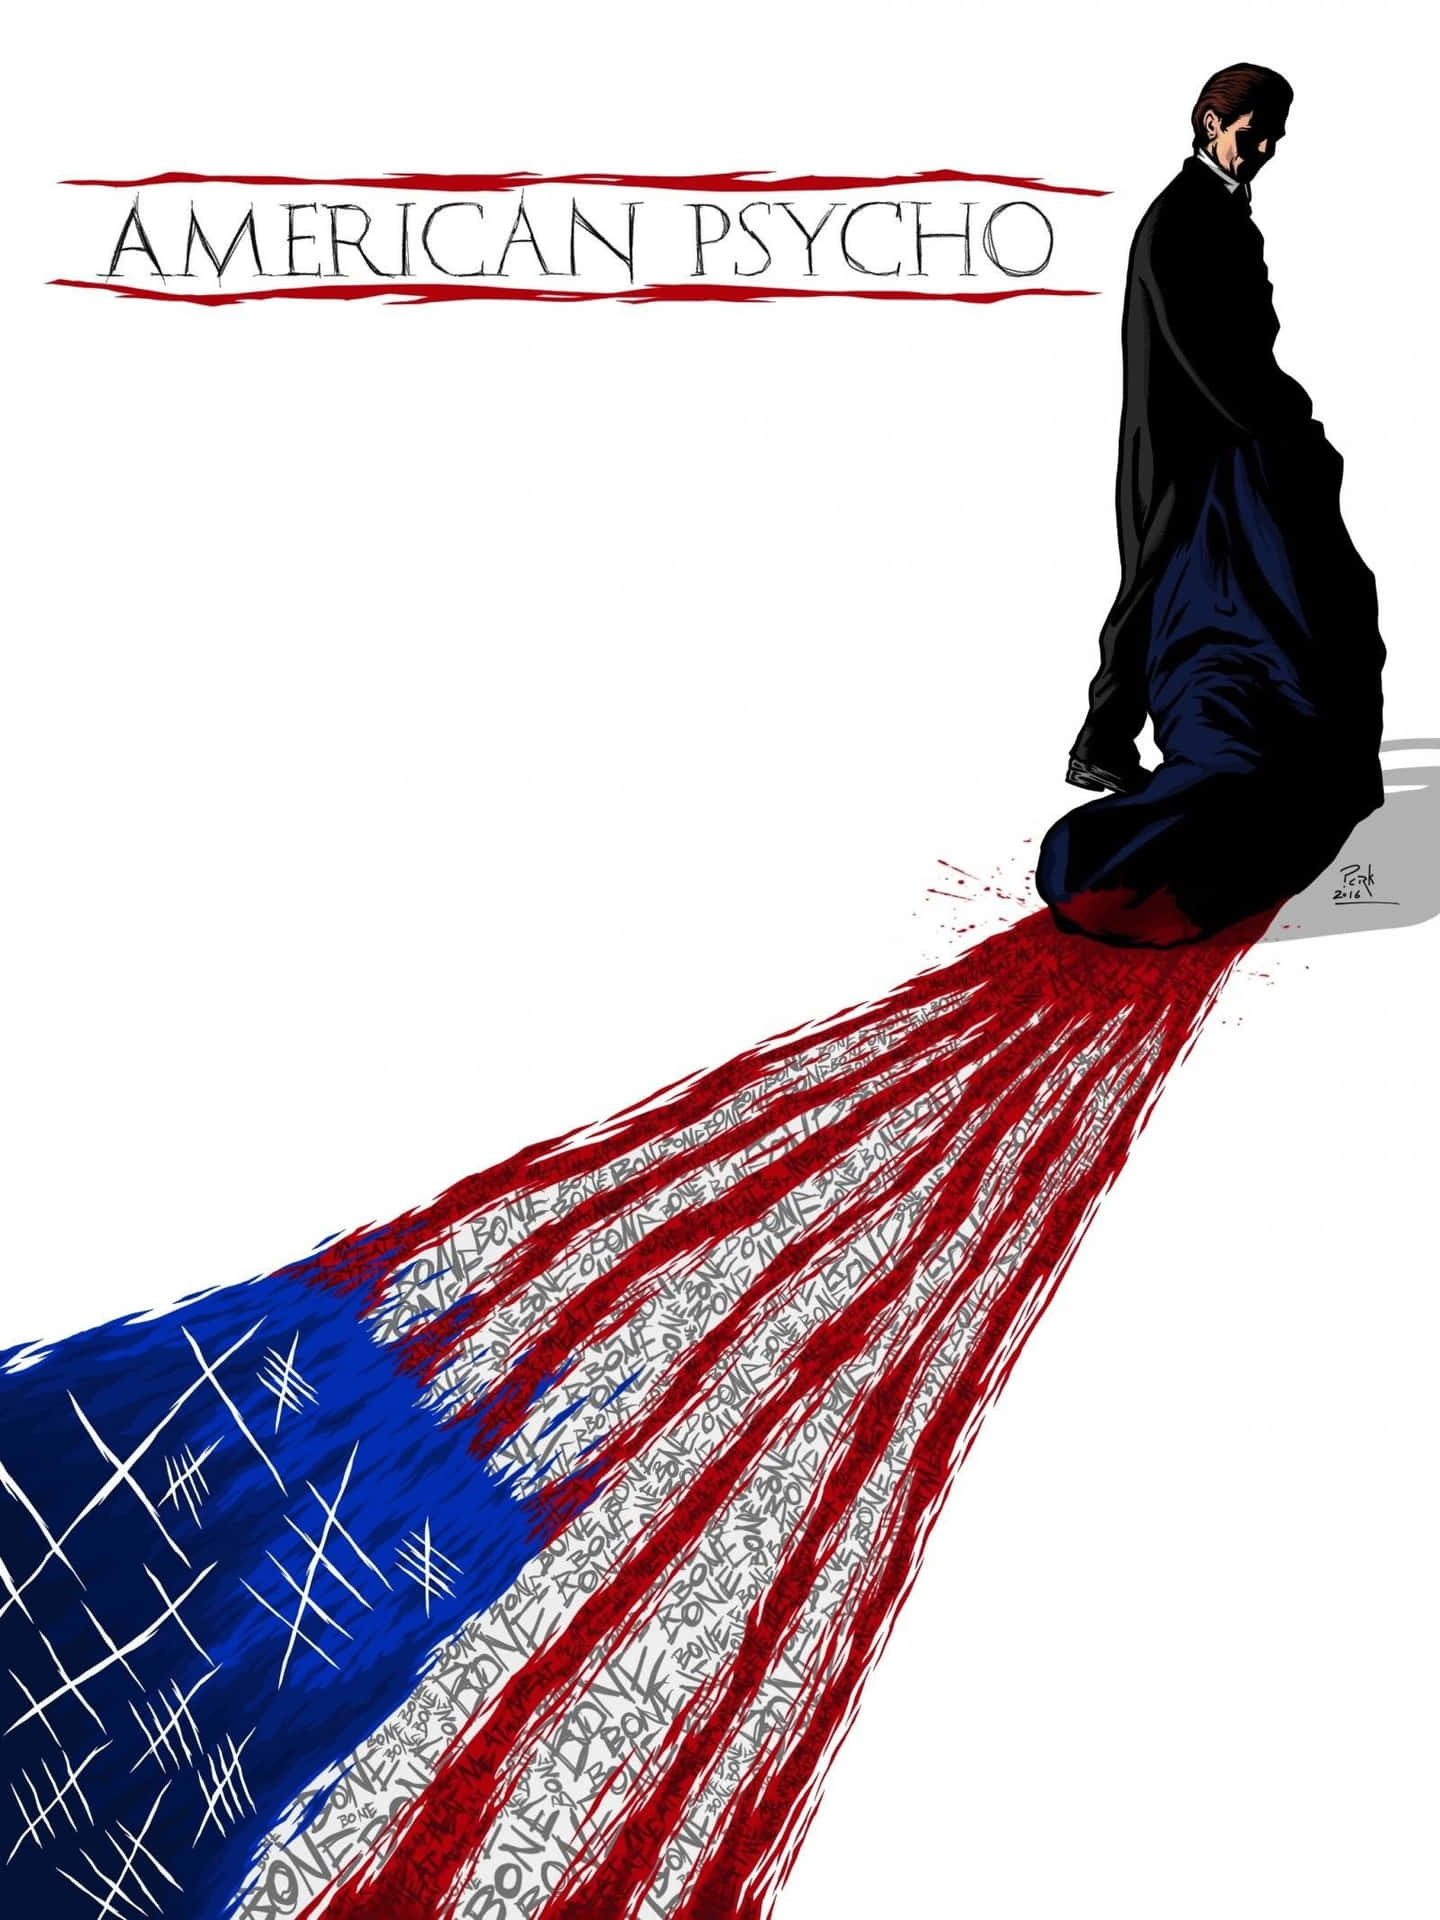 Amerikanischepsycho Flagge Hd Wallpaper